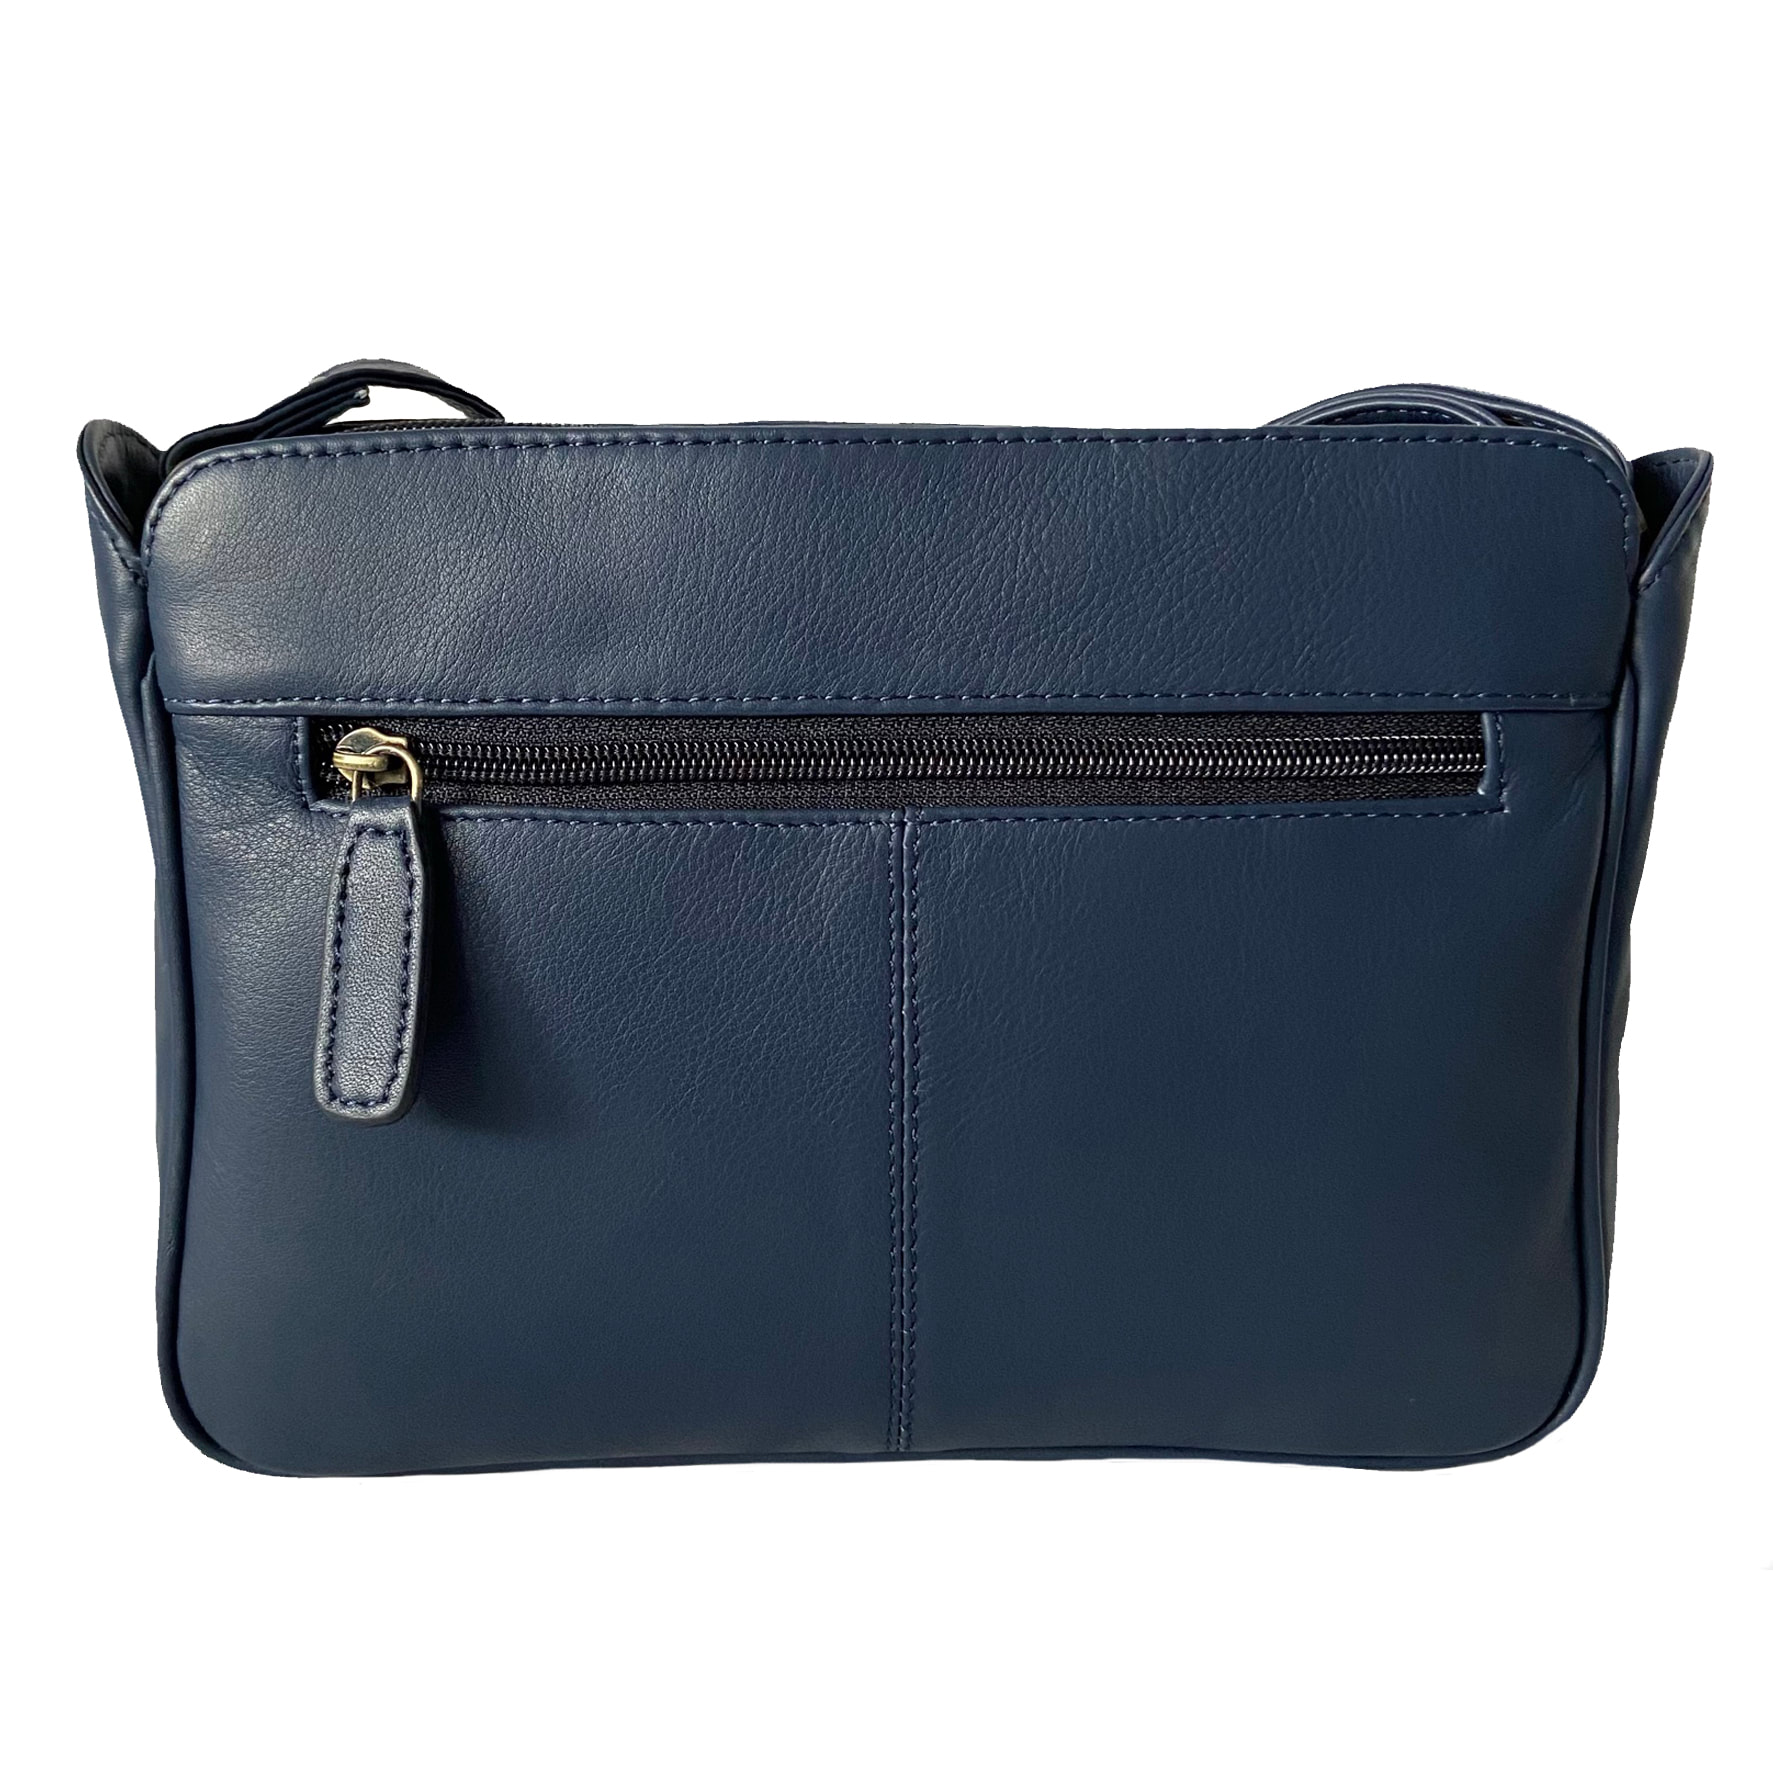 Rowallan Navy Leather Handbag, Shoulder Bag